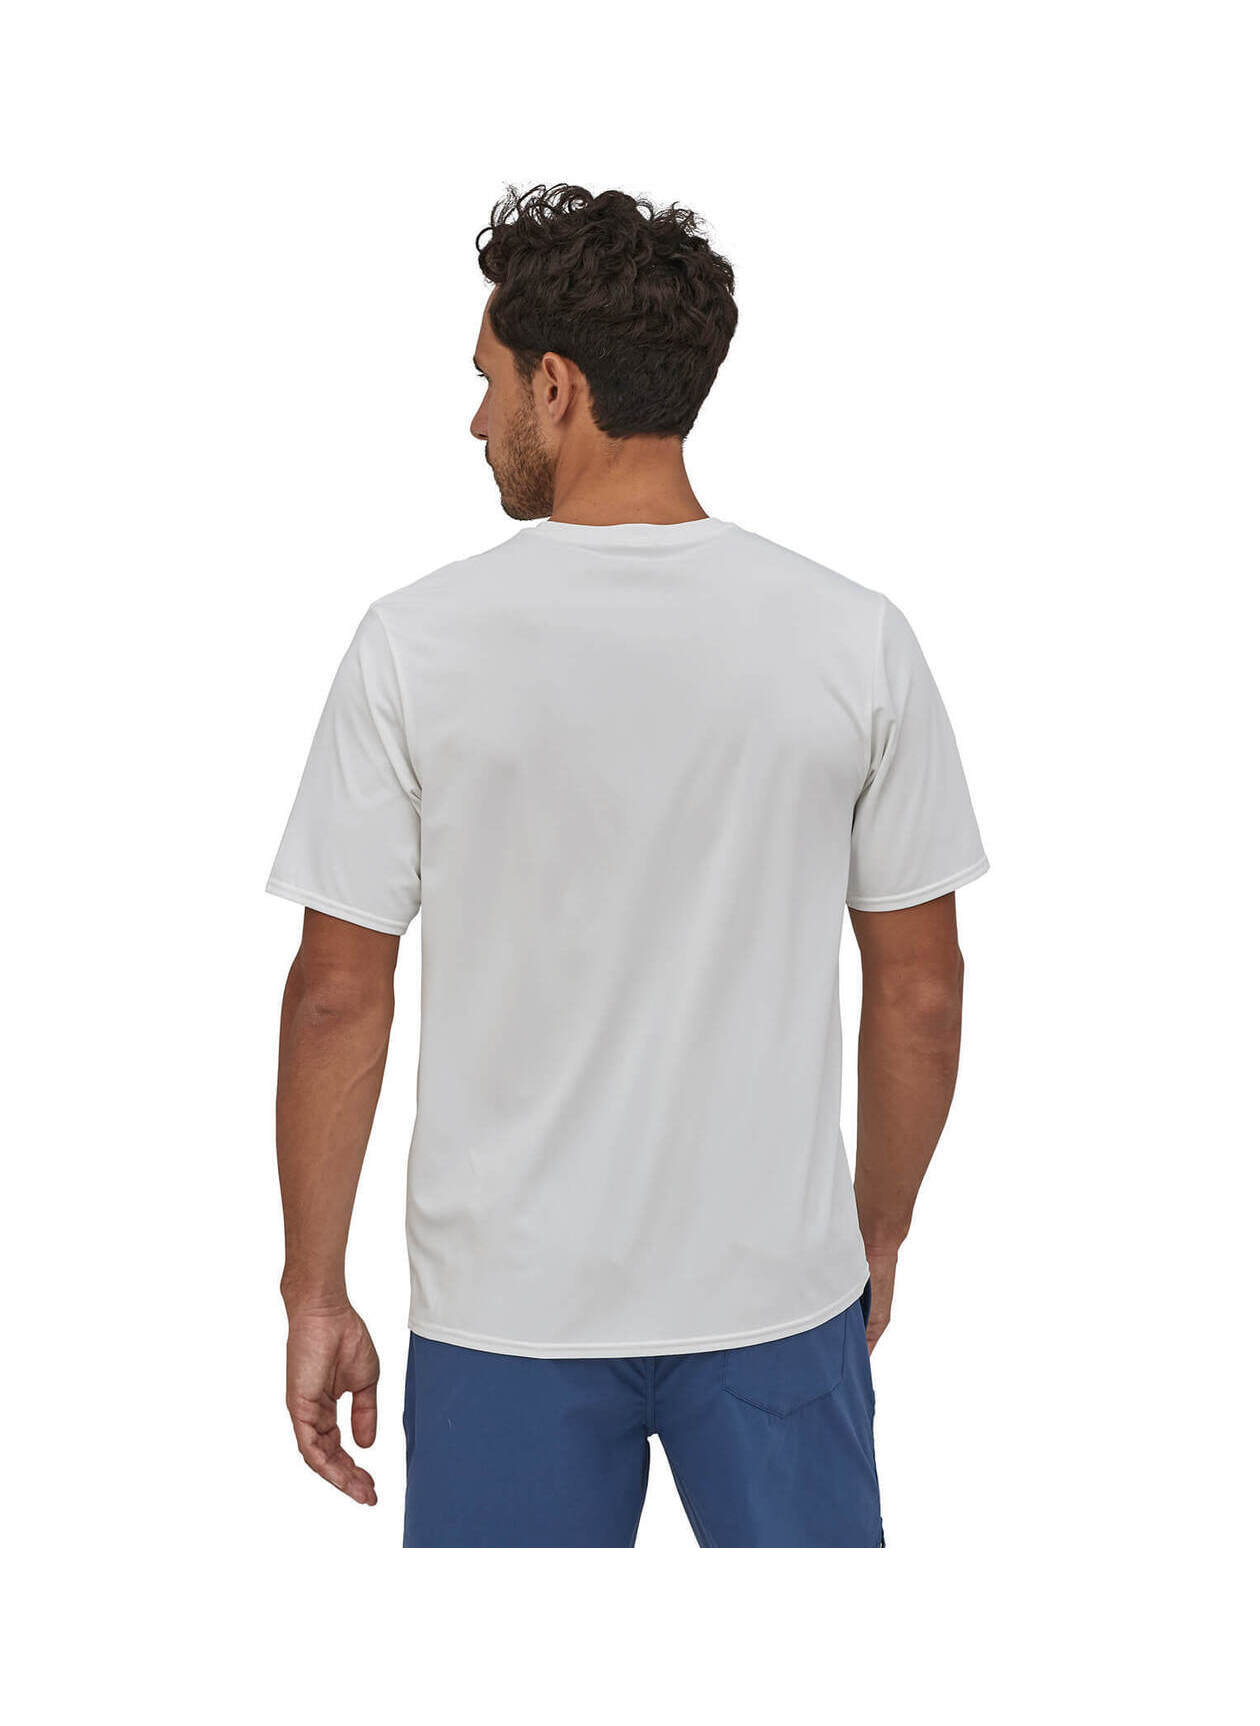 Patagonia Capilene Cool Daily T-Shirt - Men's XL Pumice - Dyno White X-Dye